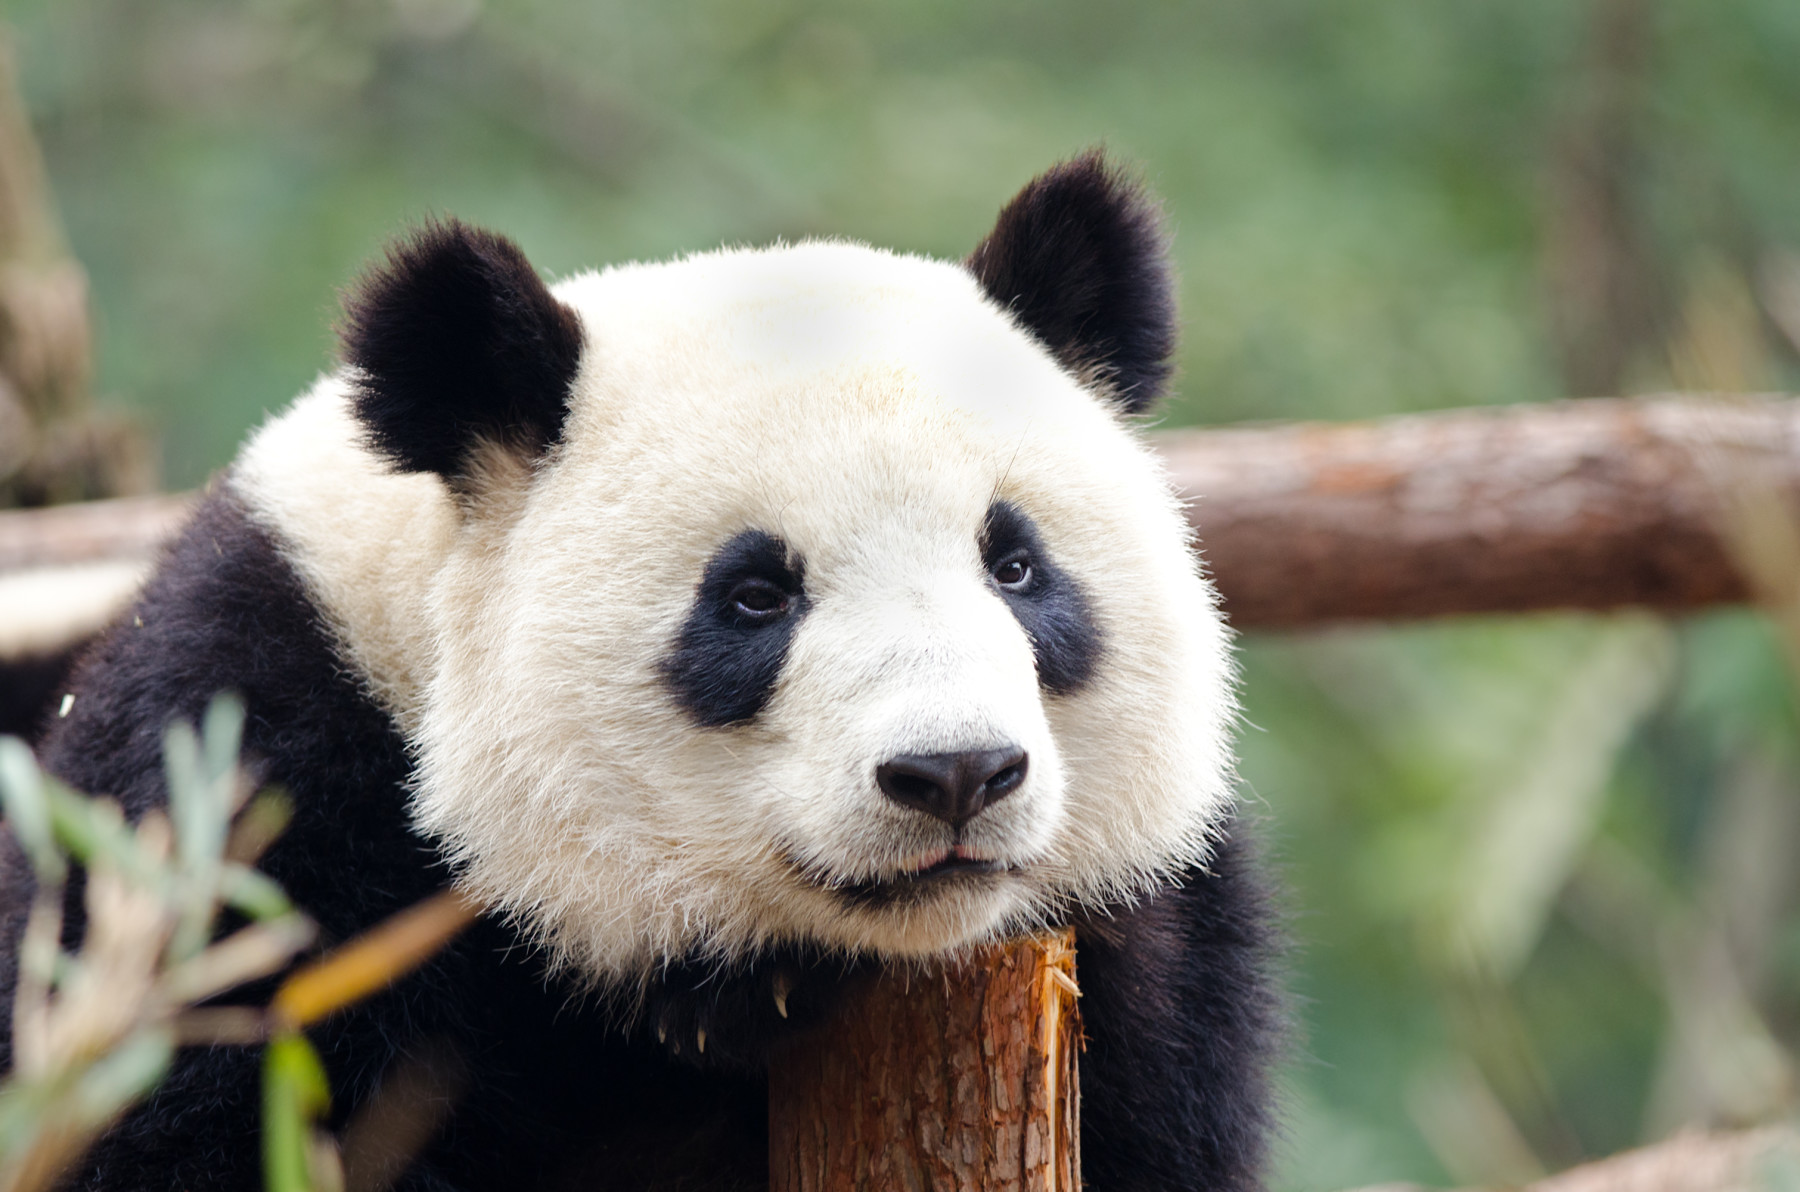 A resting Giant Panda - Sad, Tired, Bored looking Pose. Chengdu, China